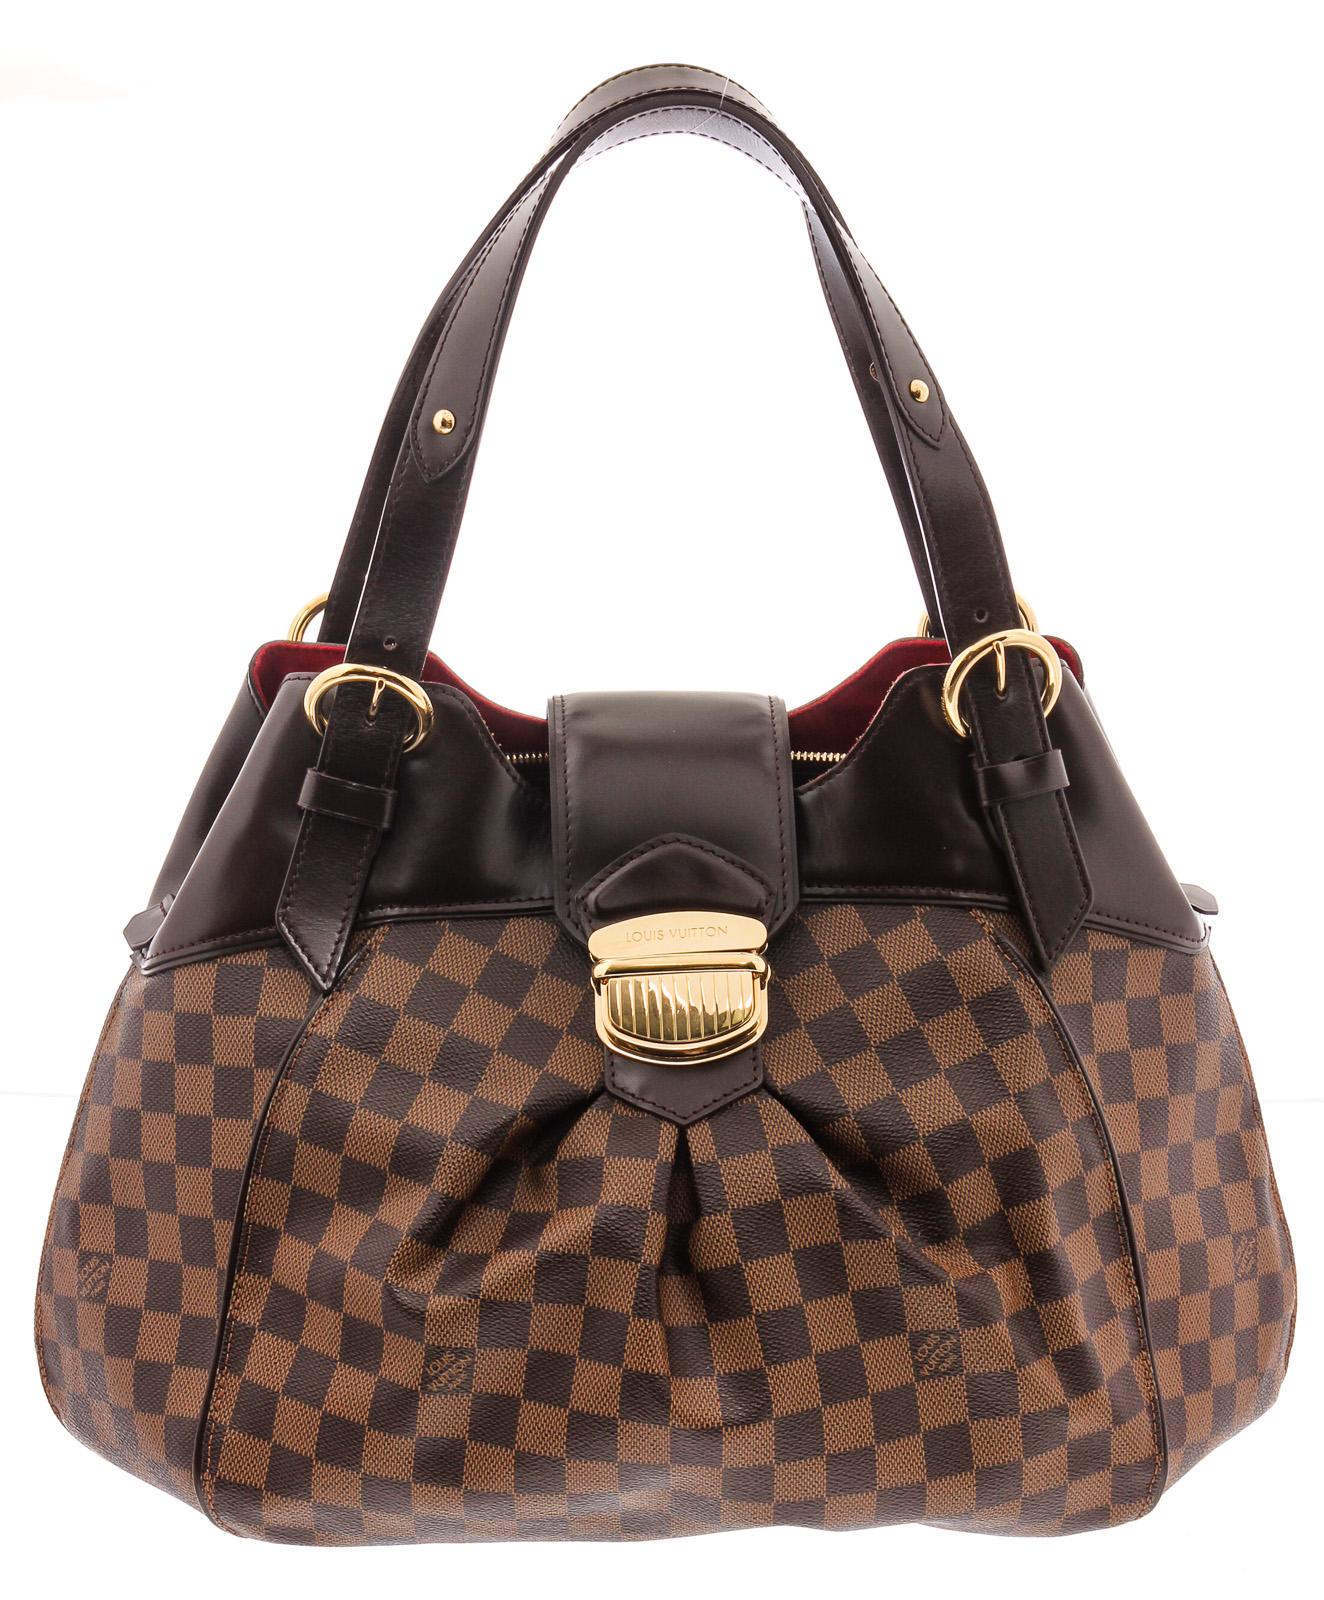 Brown Louis Vuitton Damier Ebene Canvas Leather Sistina PM Bag